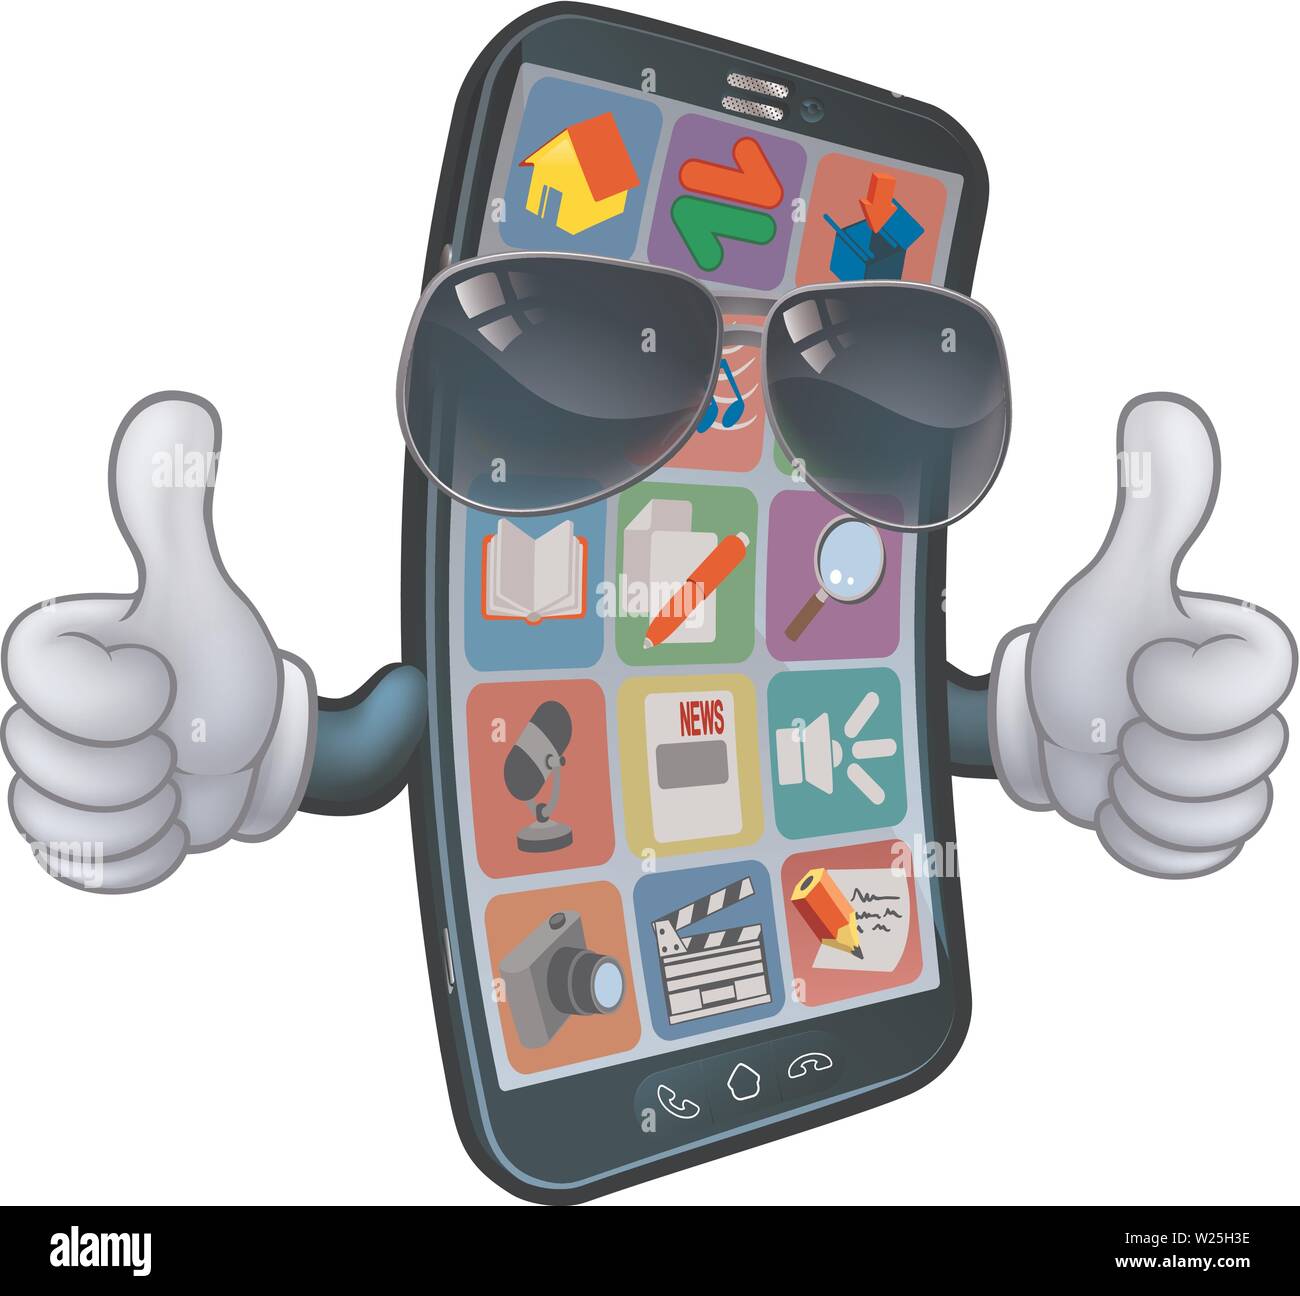 Mobile Phone Cool Shades Thumbs Up Cartoon Mascot Stock Vector